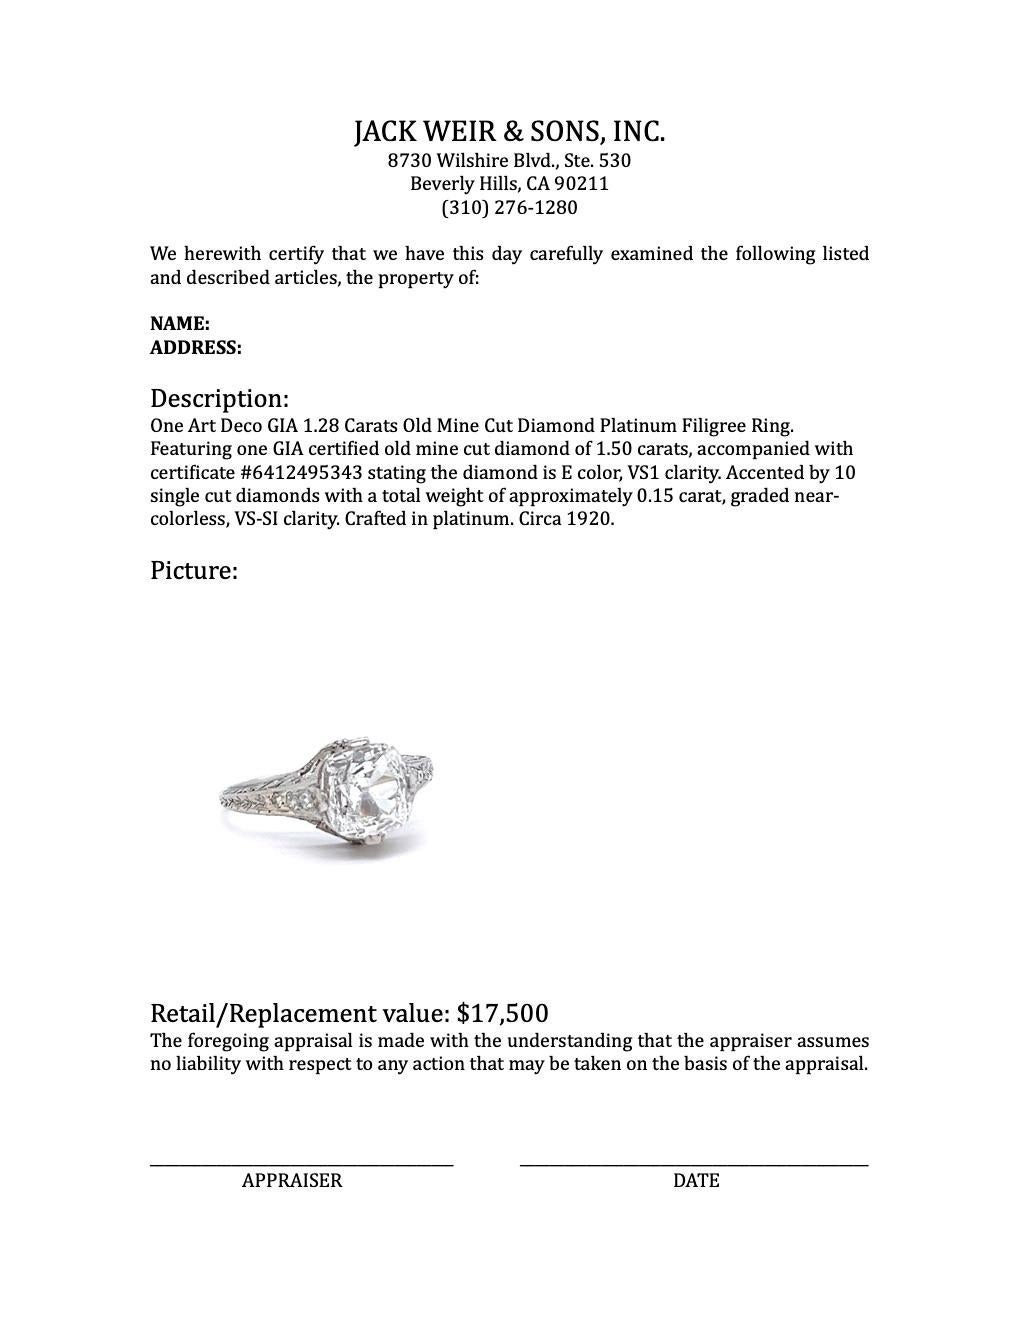 Art Deco GIA 1.28 Carats Old Mine Cut Diamond Platinum Filigree Ring 4